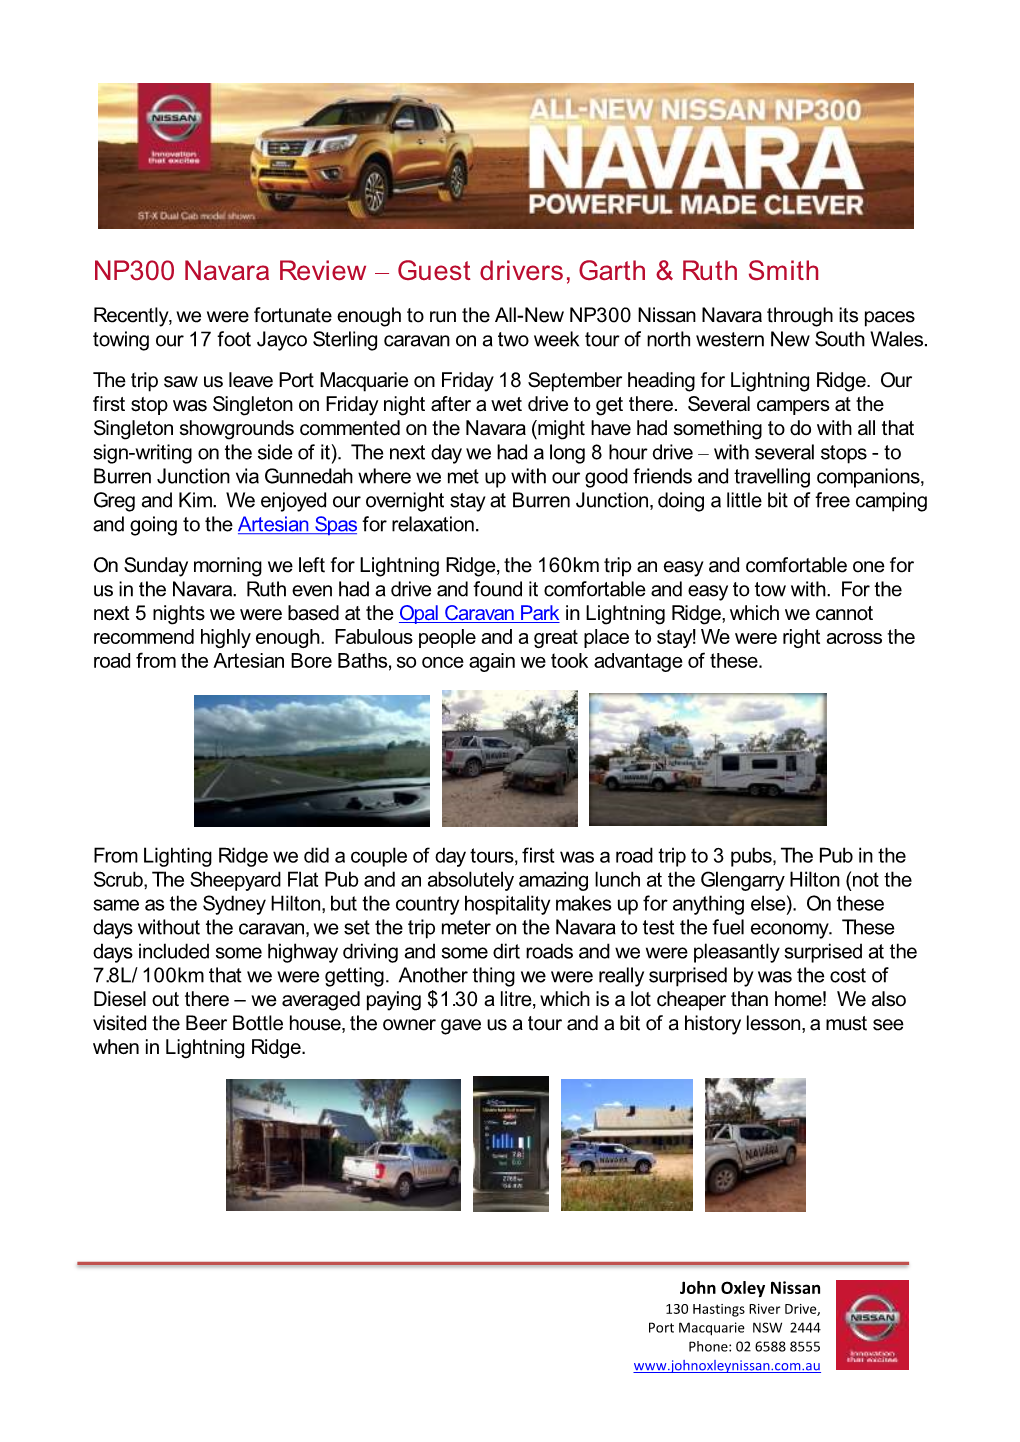 NP300 Navara Review – Guest Drivers, Garth & Ruth Smith